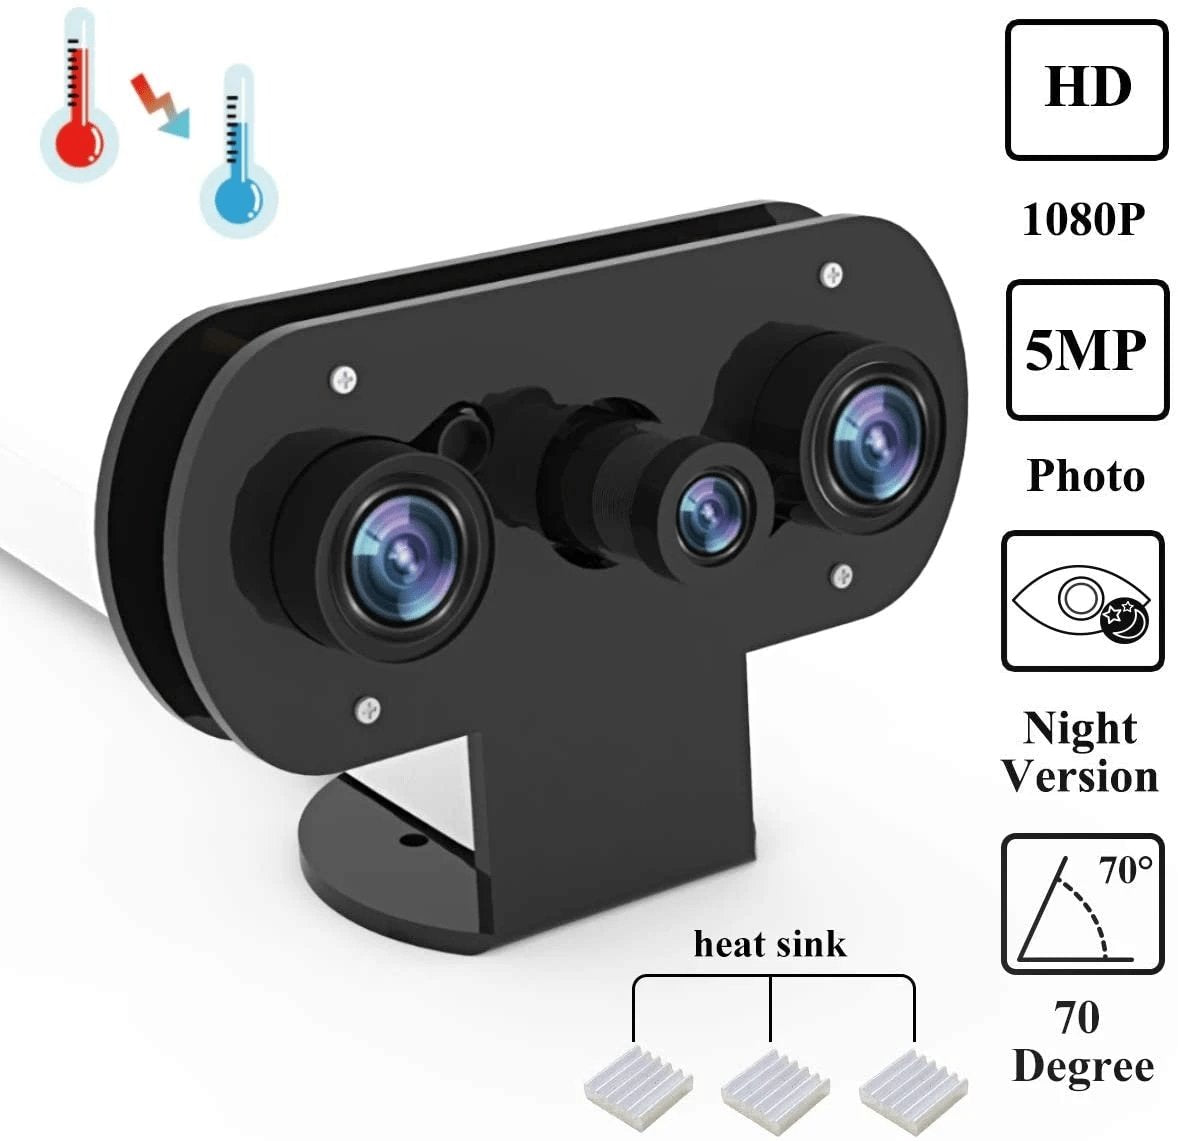 Raspberry Pi Infrared Night Vision IR Camera with Acrylic Holder Case, Adjustable-Focus Webcam for Pi 4/Pi 3 B+/Pi 3, 3D Printing / Home Security DIY